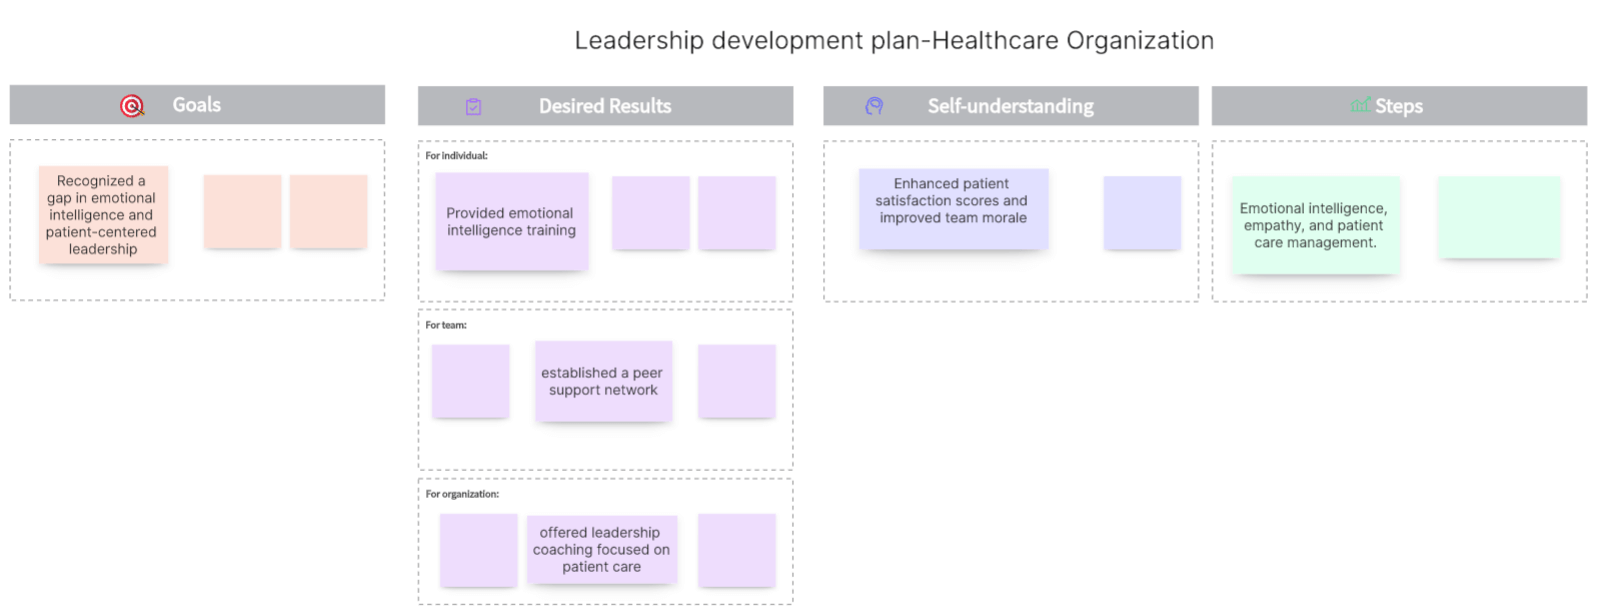 Leadership-development-plan-Healthcare-Organization